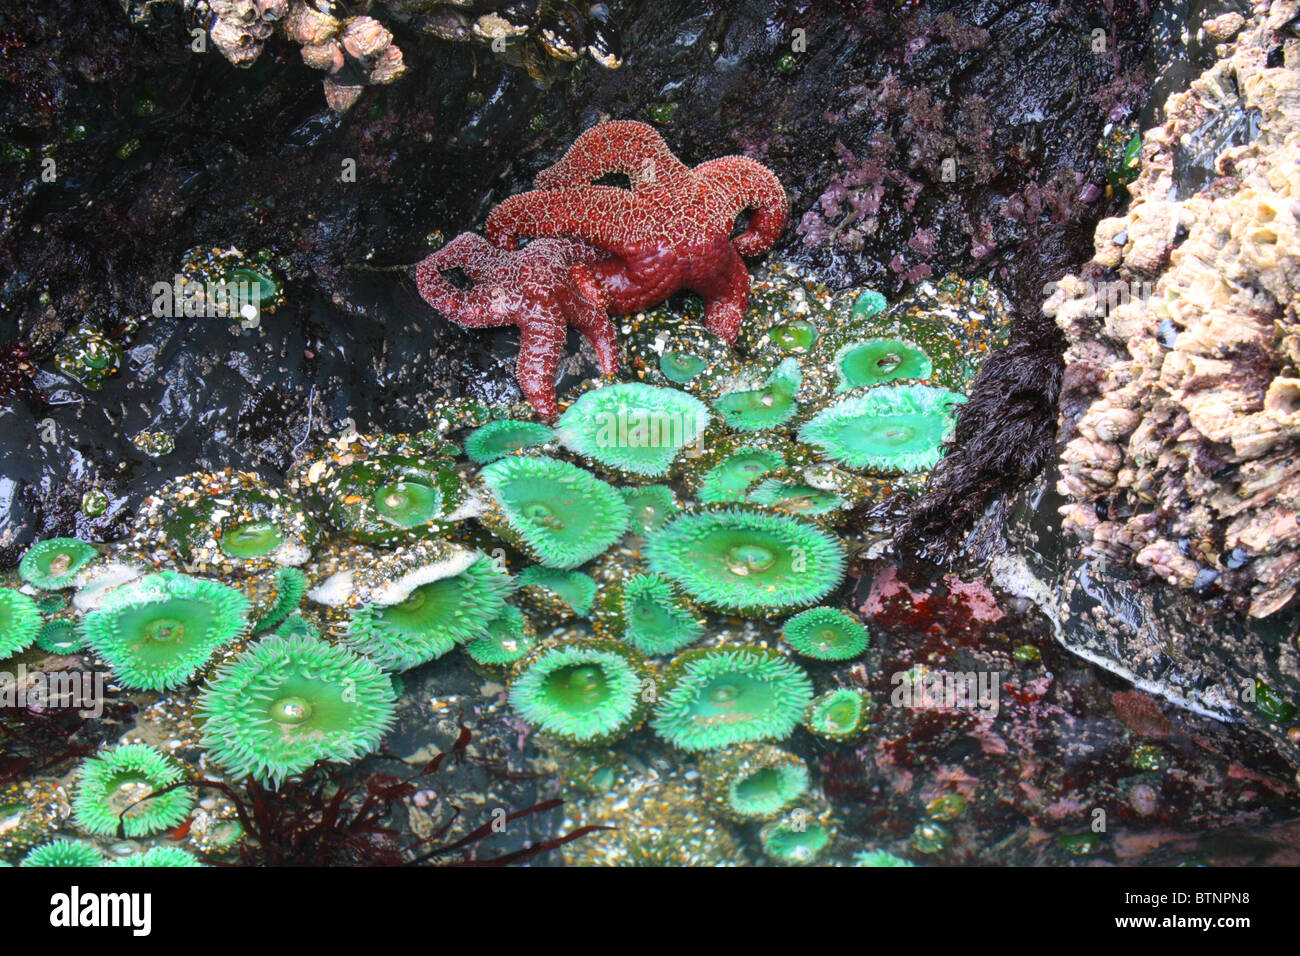 Oregon tide pool life, Pacific Ocean, Seal Rock, Oregon. Starfish, sea anemone, mussel, acorn barnacles on a rock under water. Stock Photo